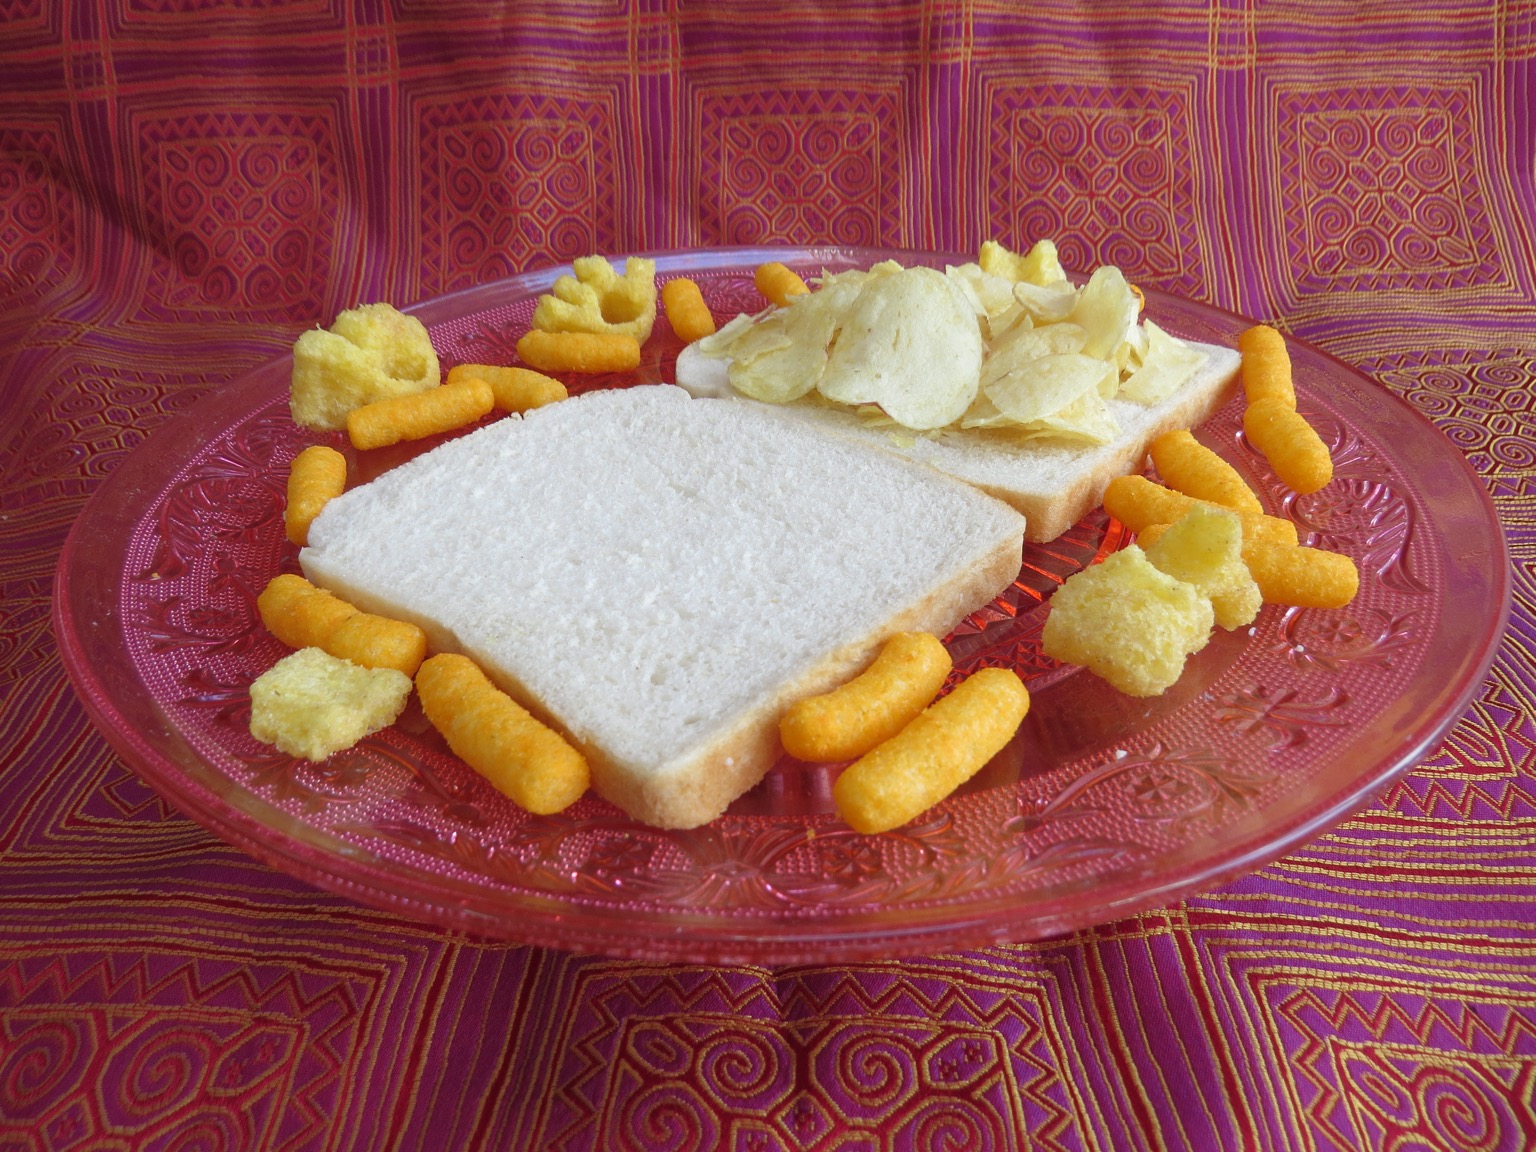 Open potato crisp sandwich surrounded by corn snacks